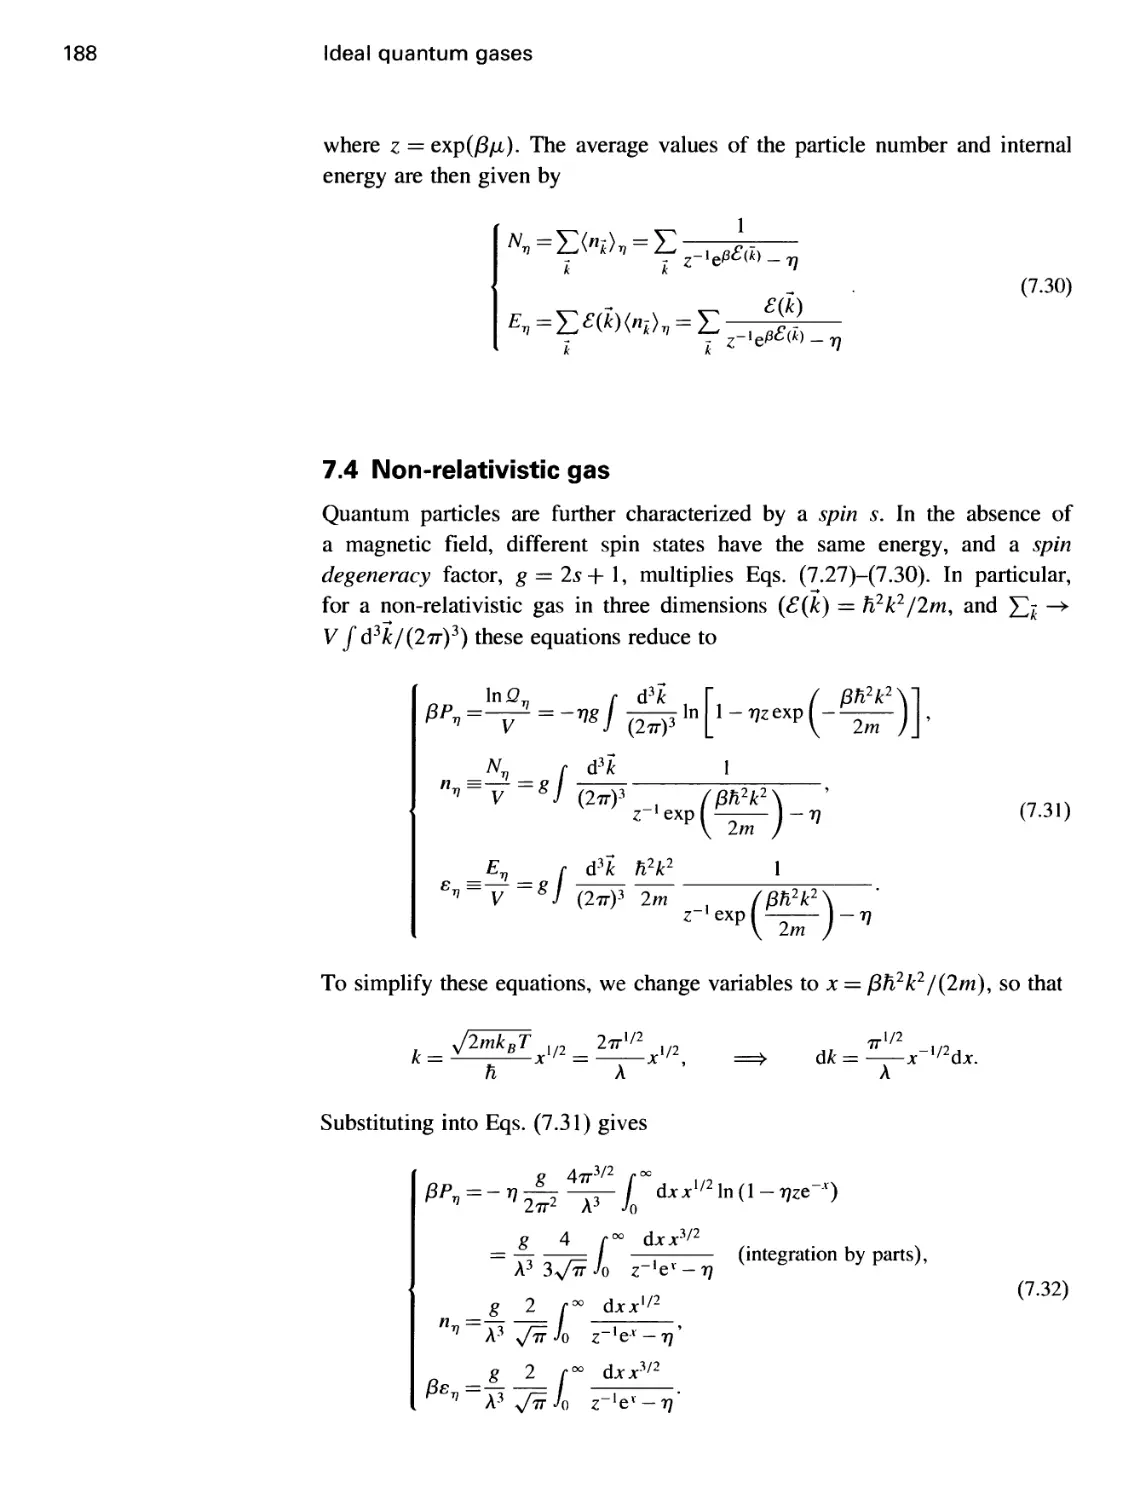 7.4 Non-relativistic gas